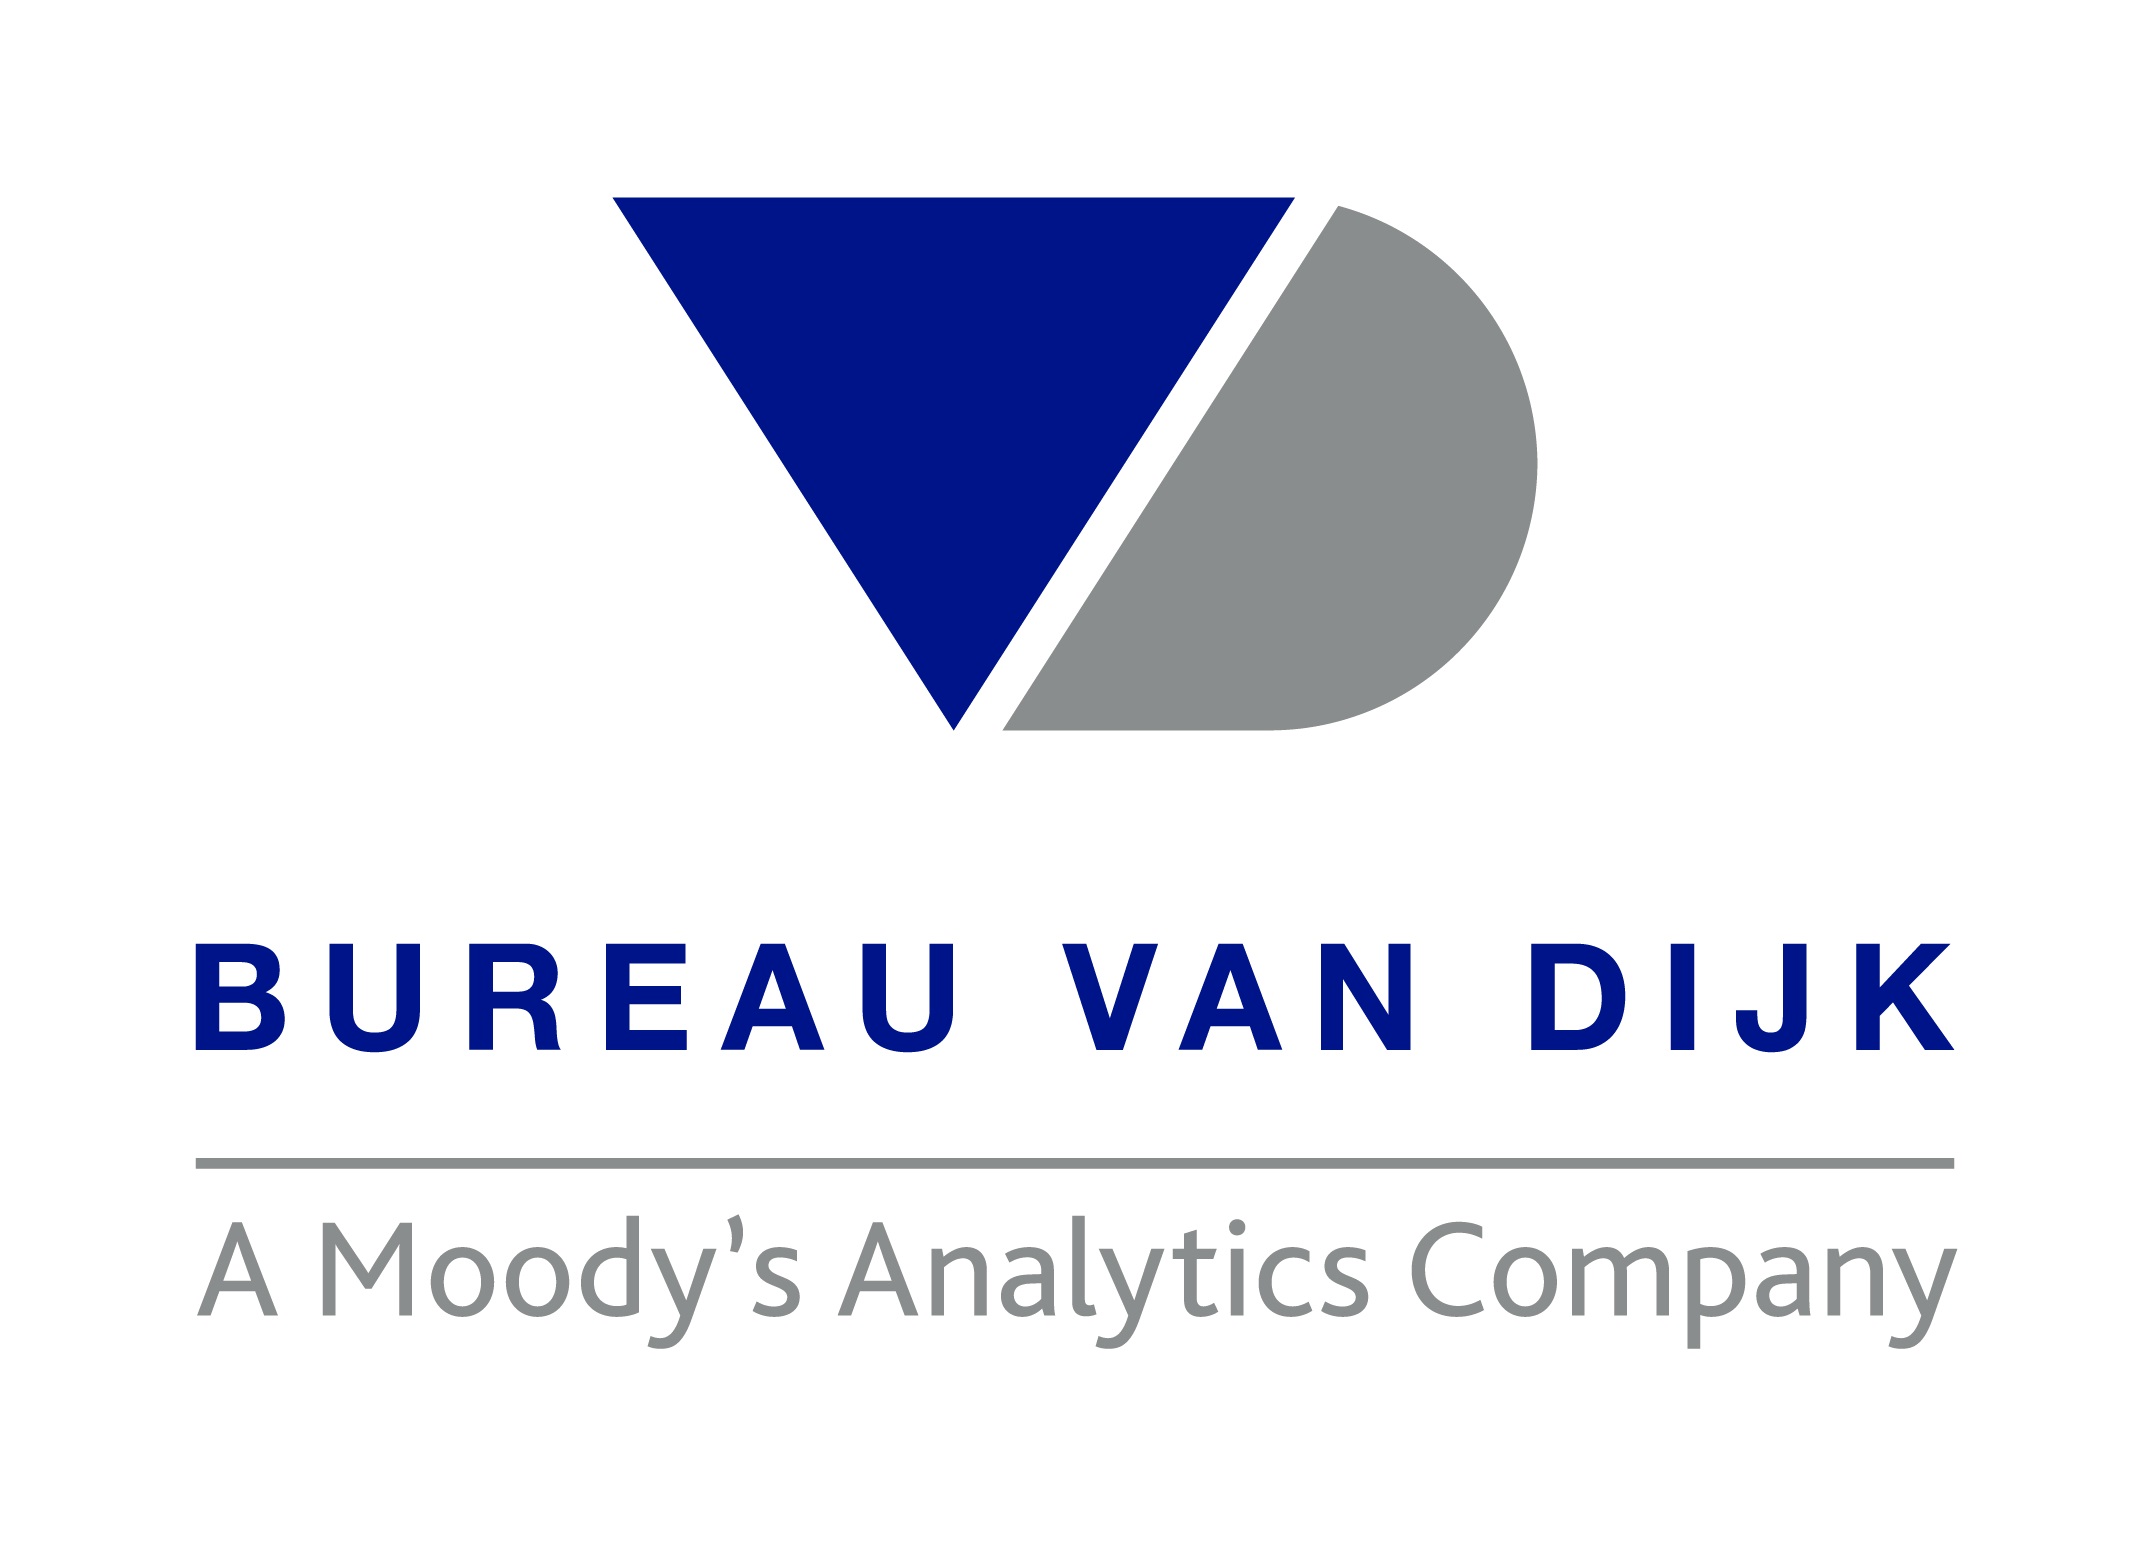 Bureau van Dijk, A Moody's Analytics Company - Stand # 15